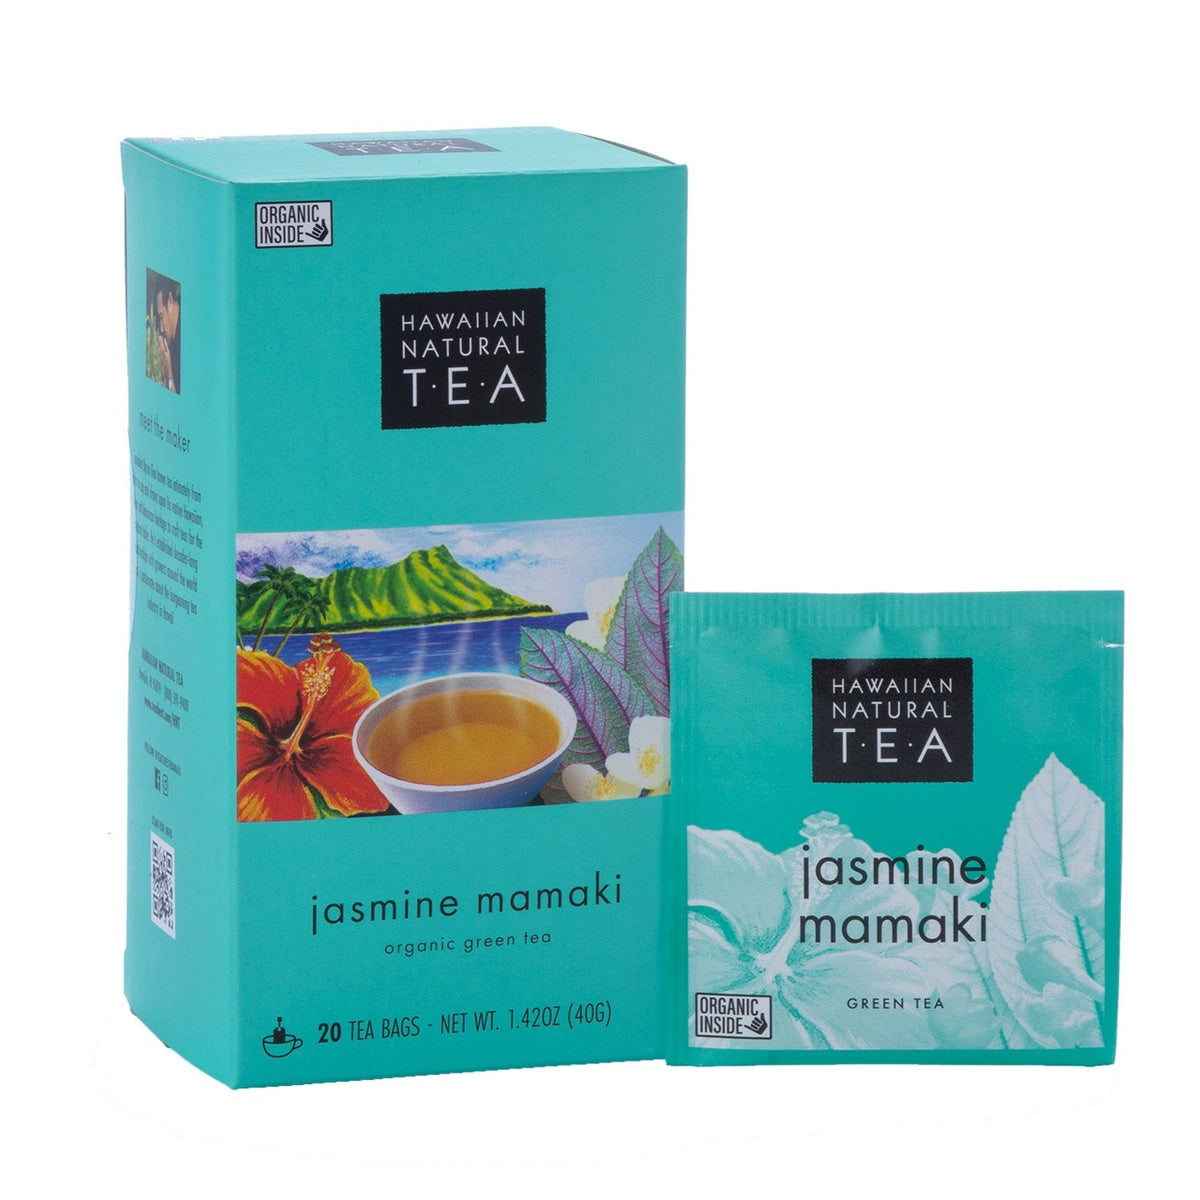 Pop-Up Mākeke - Tea Chest Hawaii - Organic Green Tea - Jasmine Mamaki